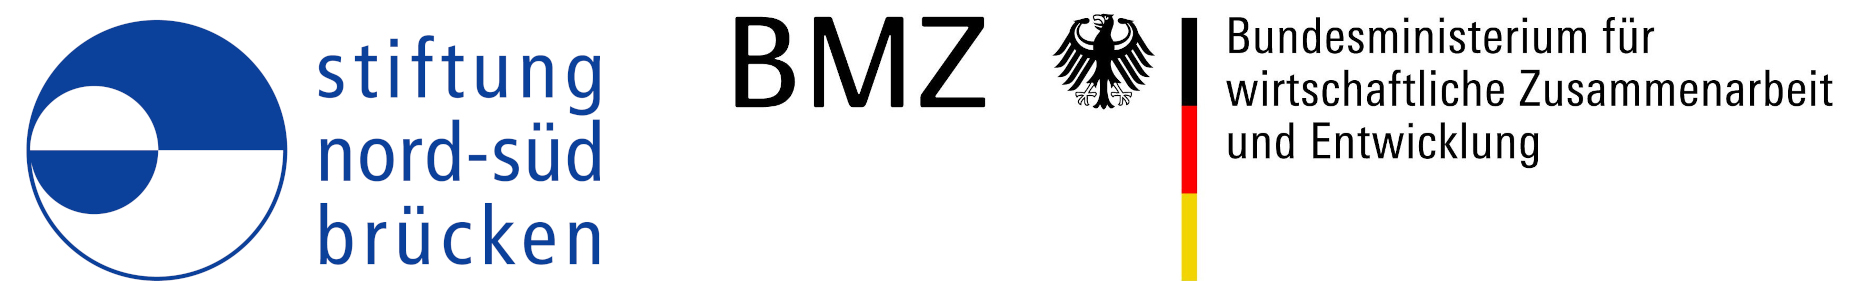 logos_nsb_bmz.jpg